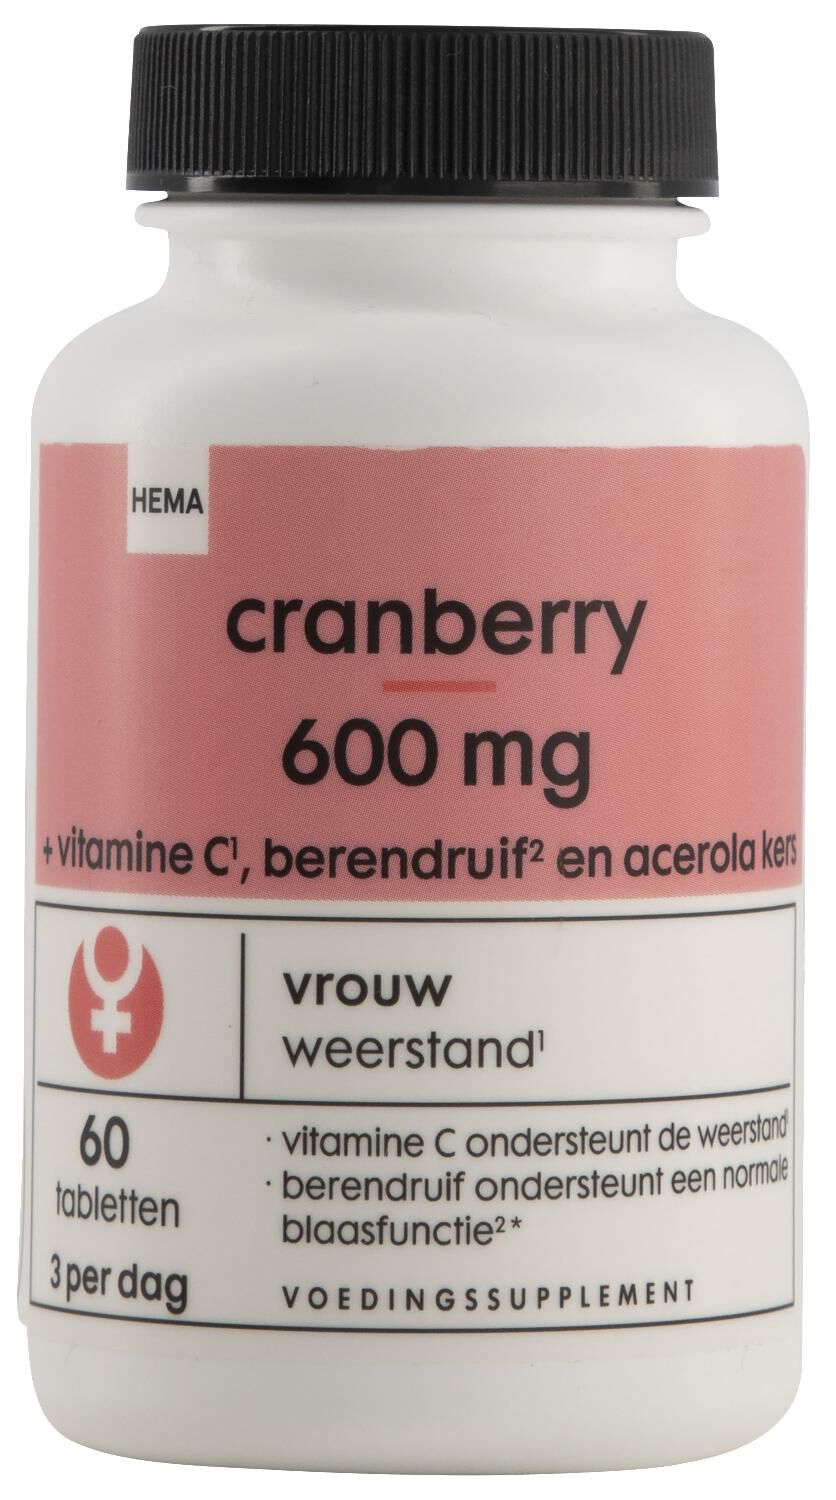 HEMA Cranberry 600mg - 60 Stuks